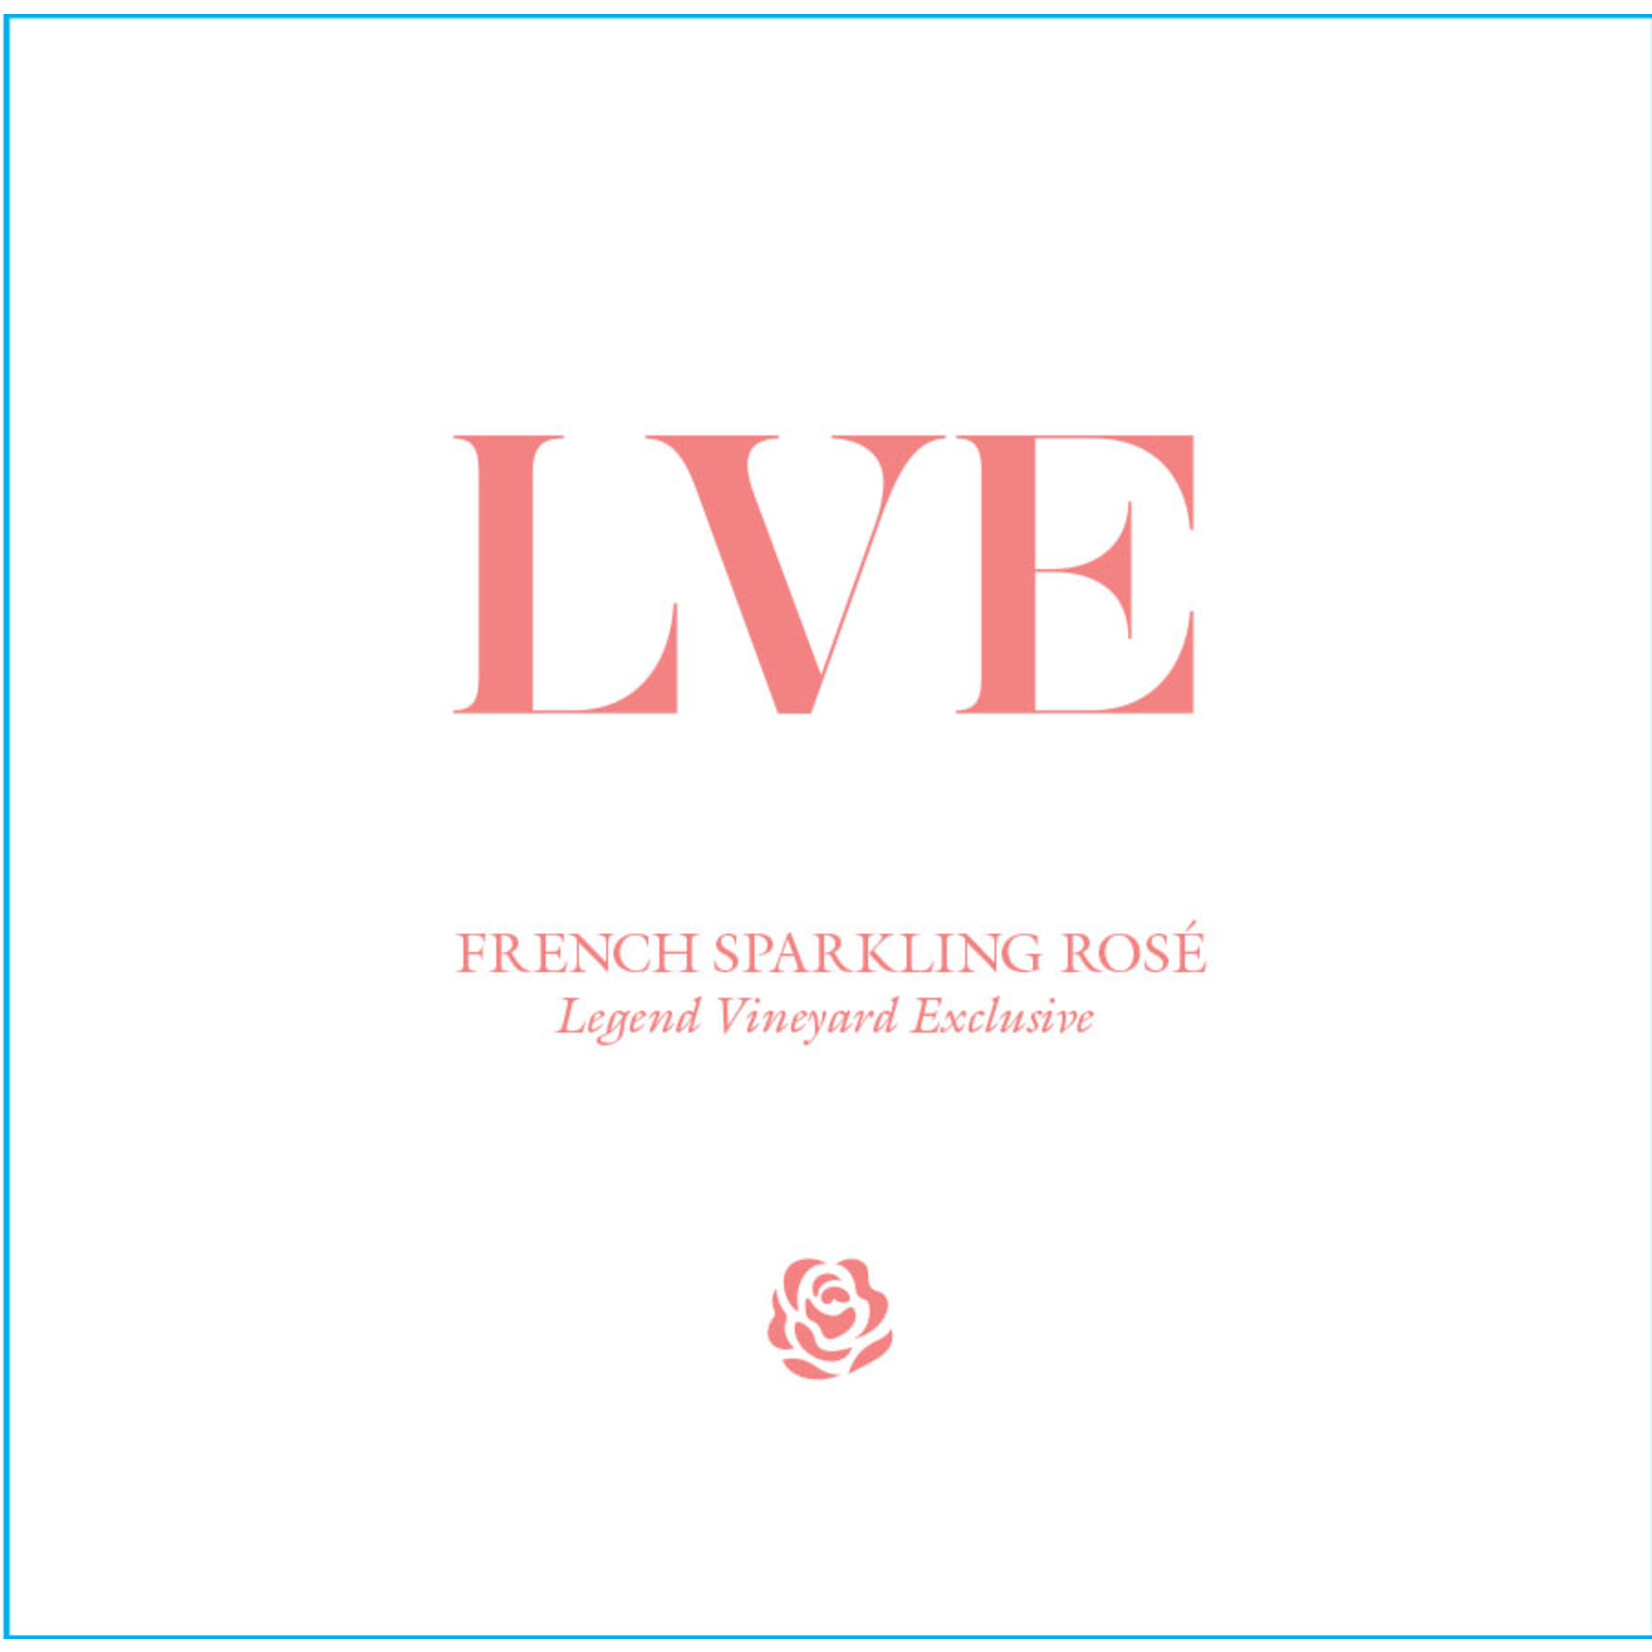 LVE Legend Vineyard Exclusive French Sparkling Rose